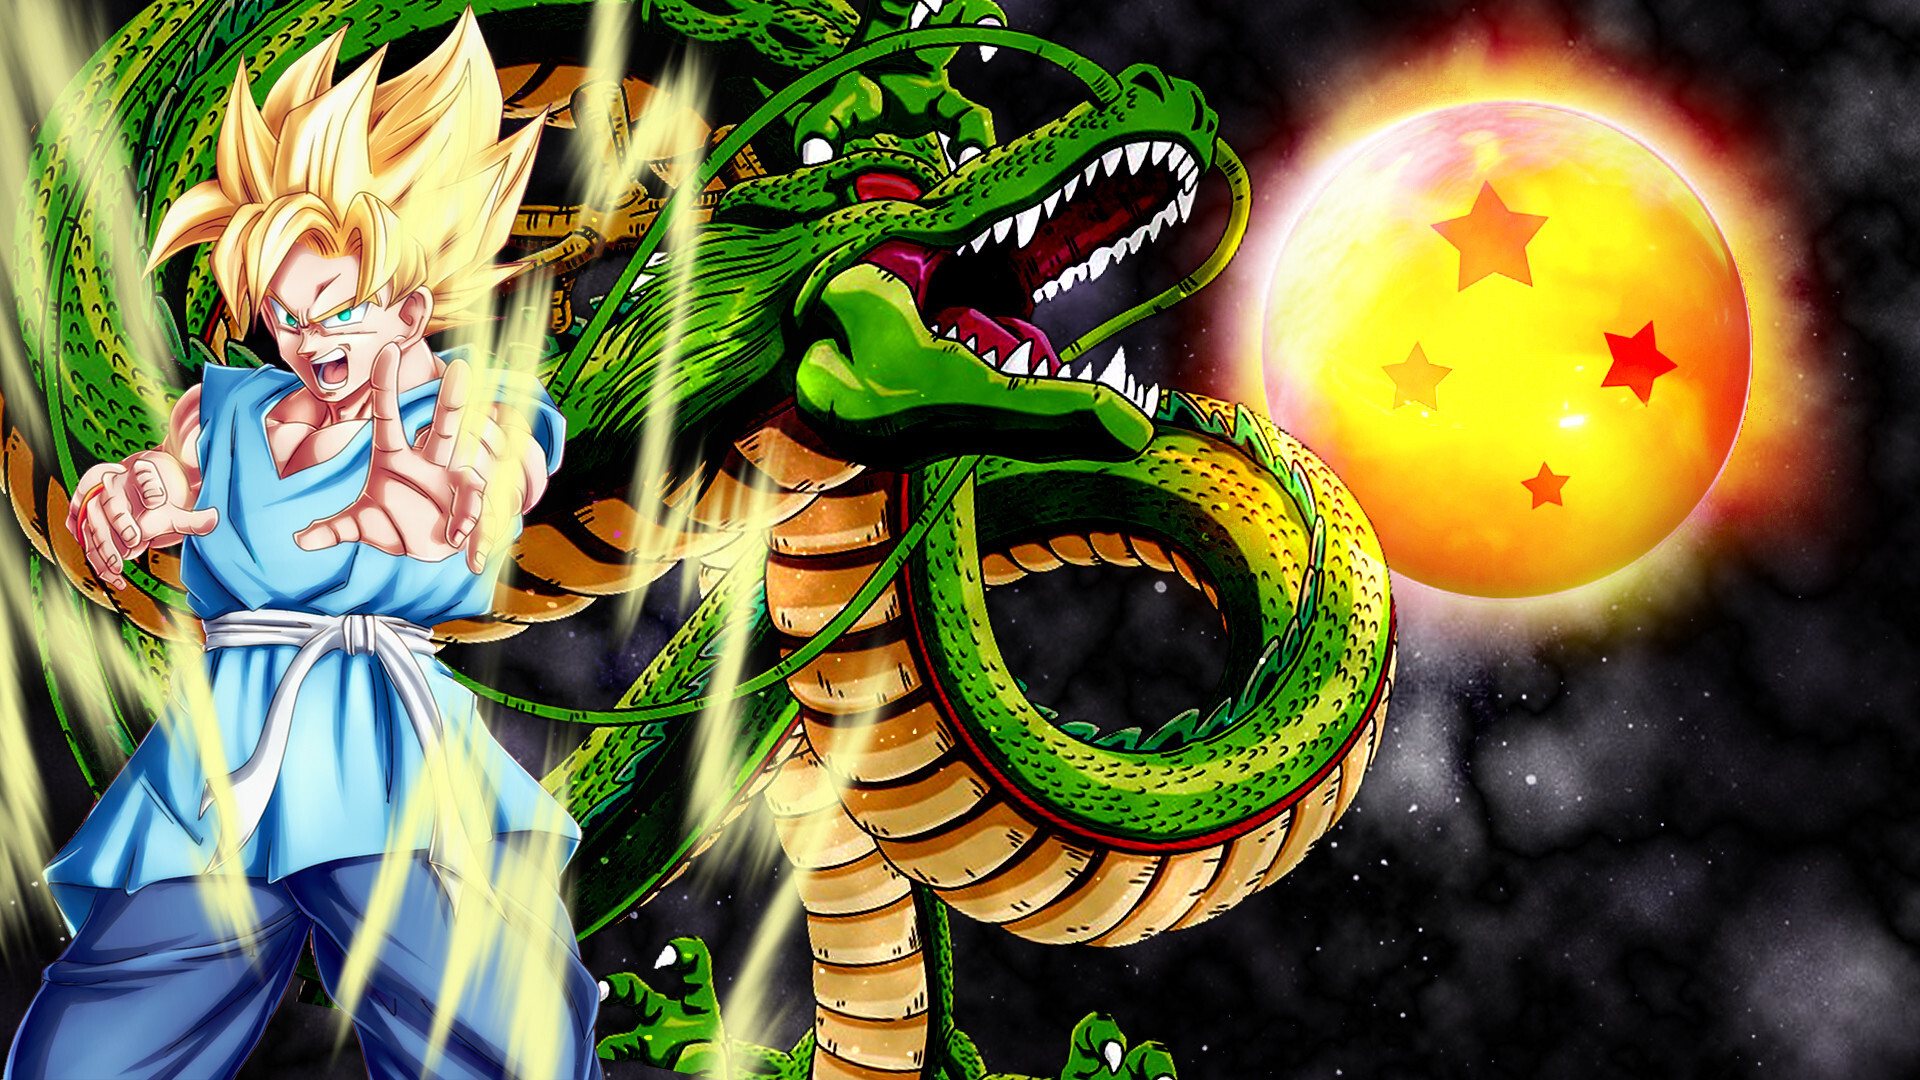 Goku Super Saiyan: A boy with superhuman strength, The Earth's mightiest warrior, Japanese anime and manga series. 1920x1080 Full HD Wallpaper.